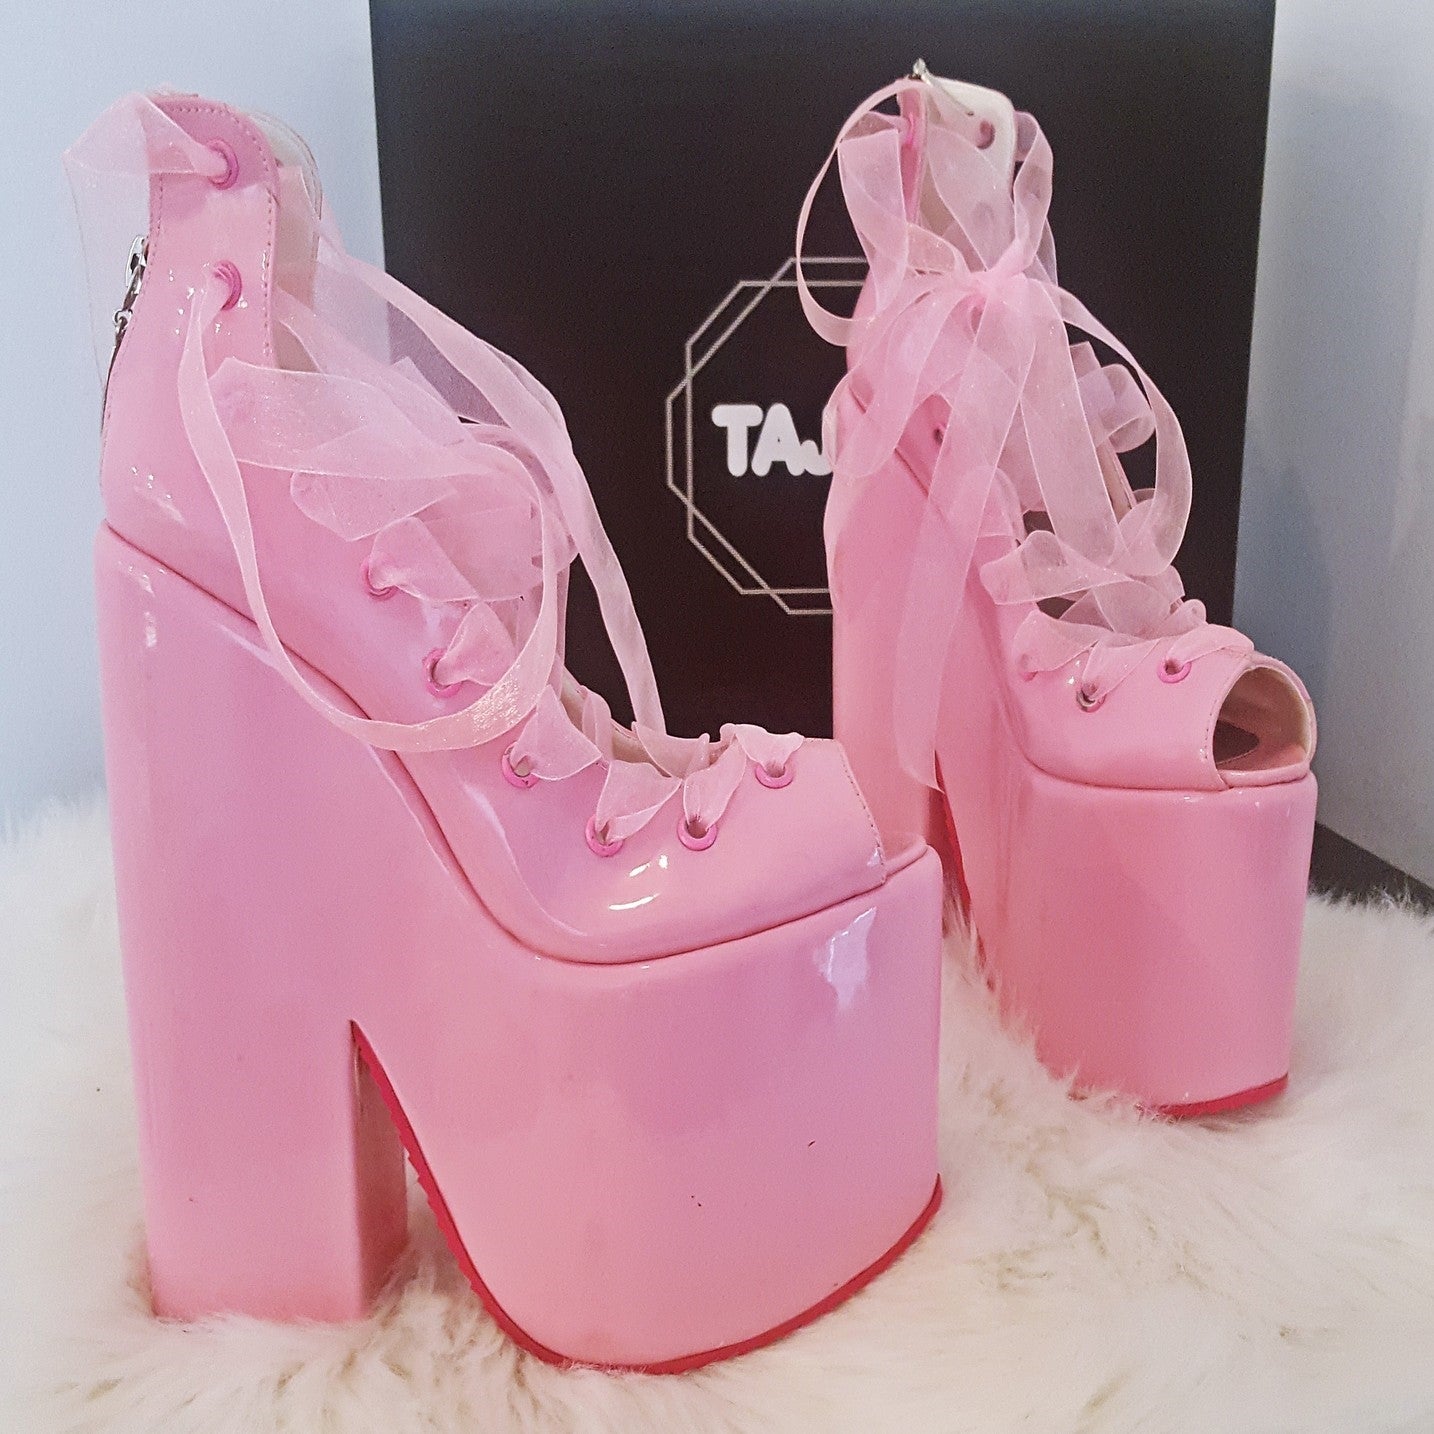 Lace Up Light Pink Balerinas Platform Wedge Shoes - Tajna Club